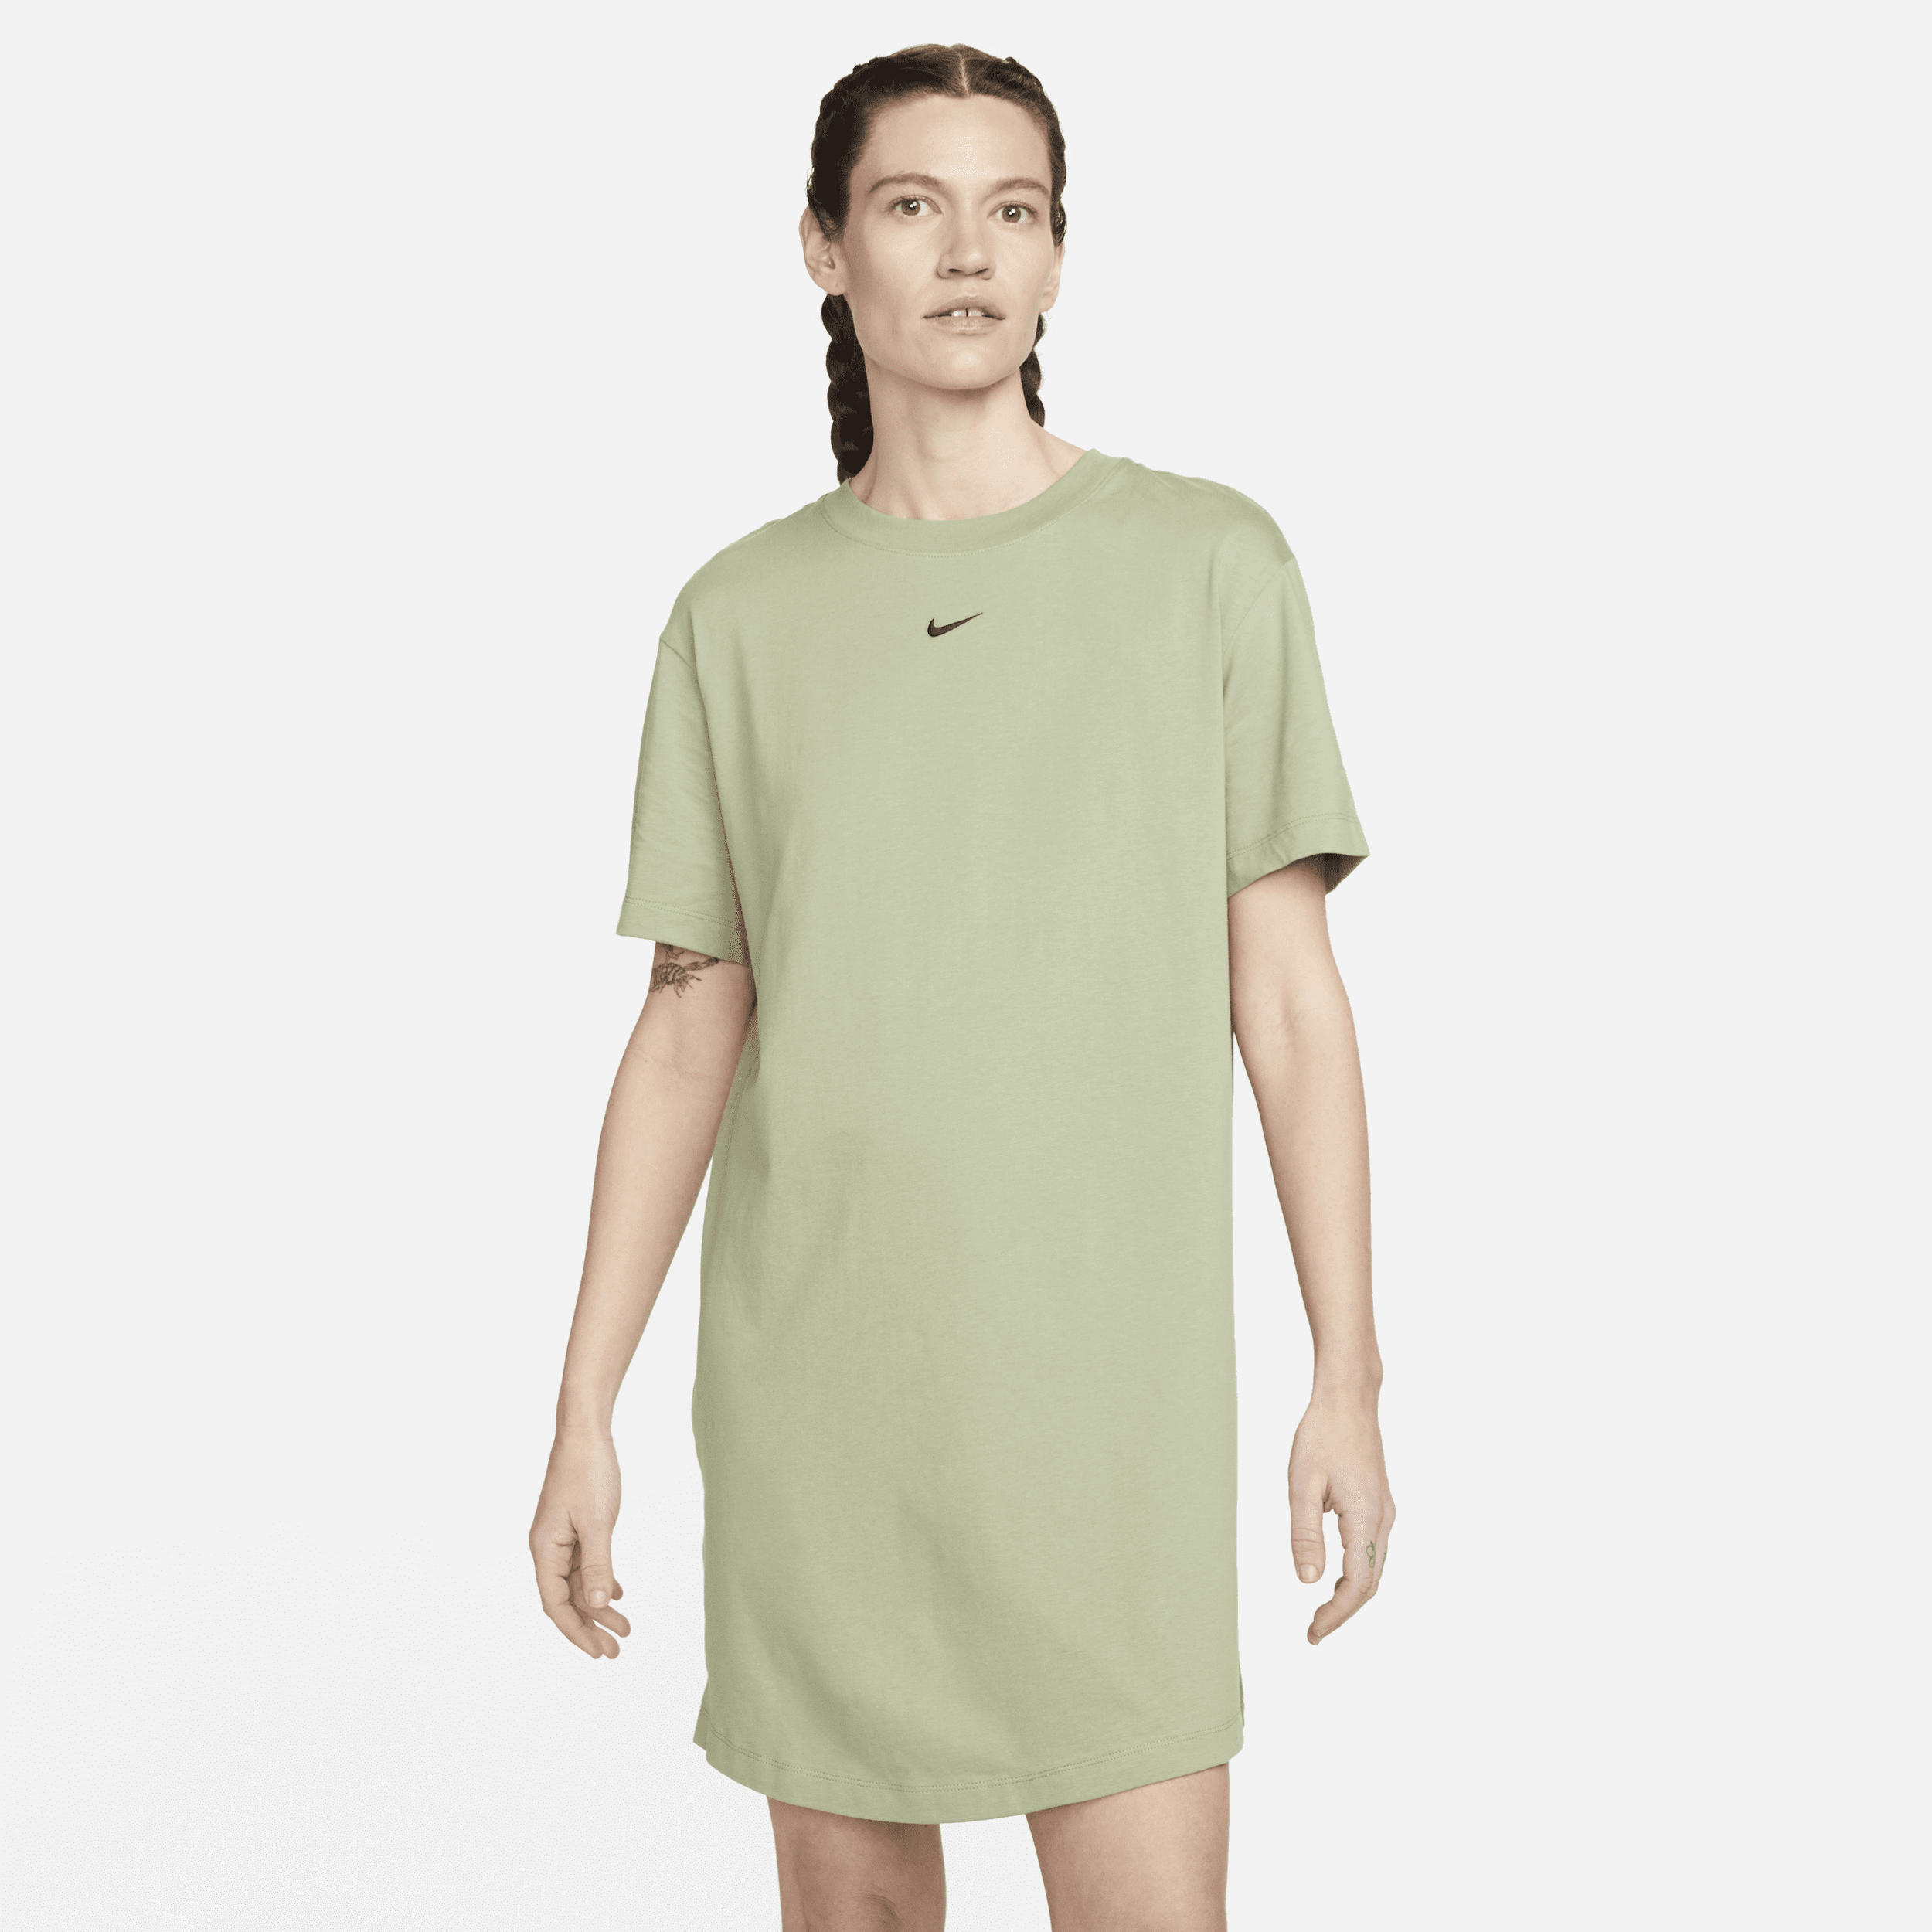 Oversized, maskinstrikket Nike Sportswear-T-shirt til kvinder - grøn